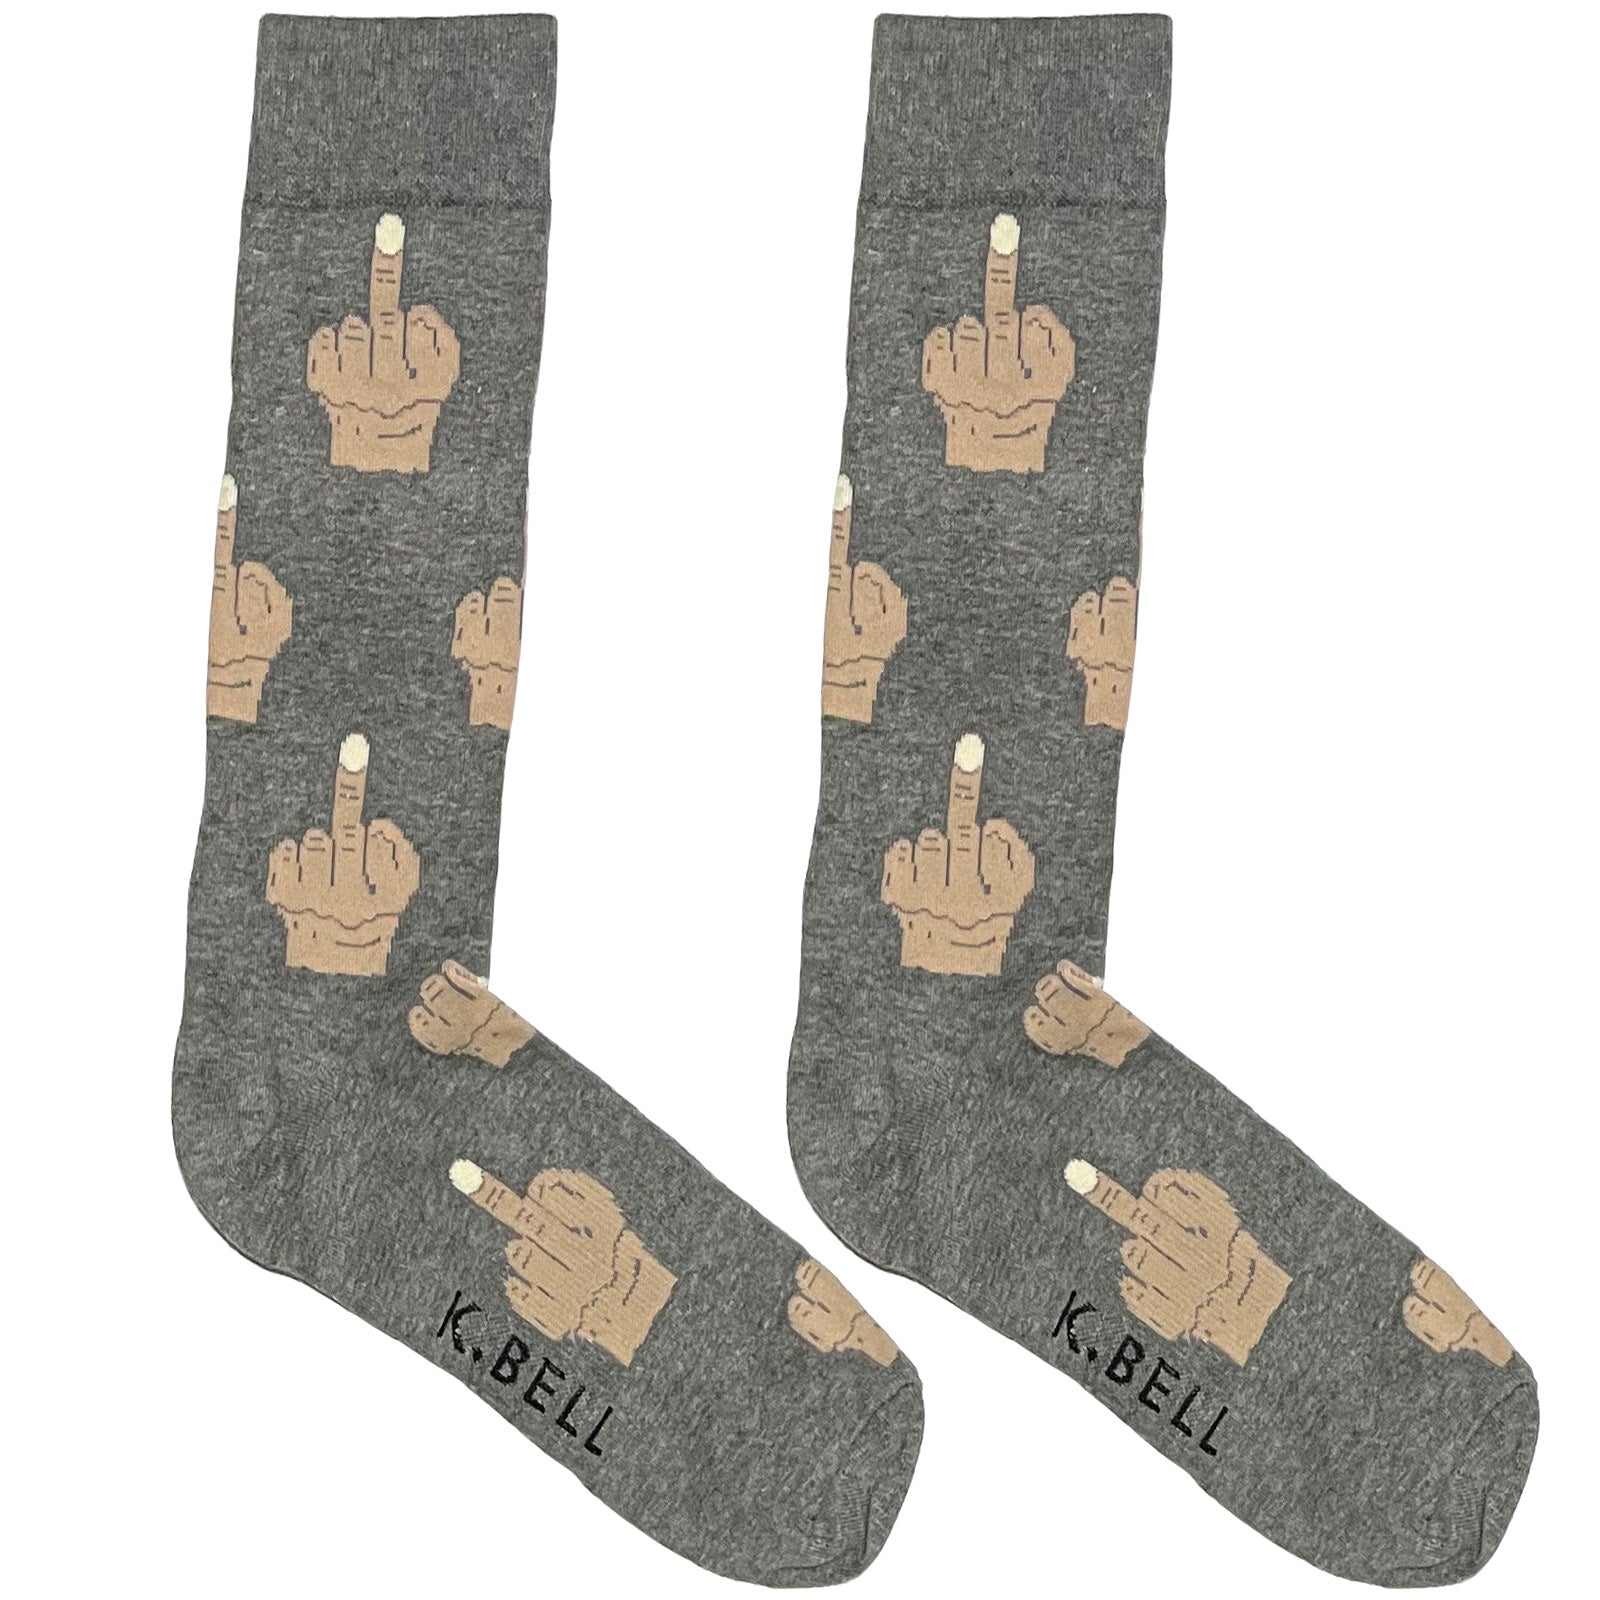 Middle Finger Socks